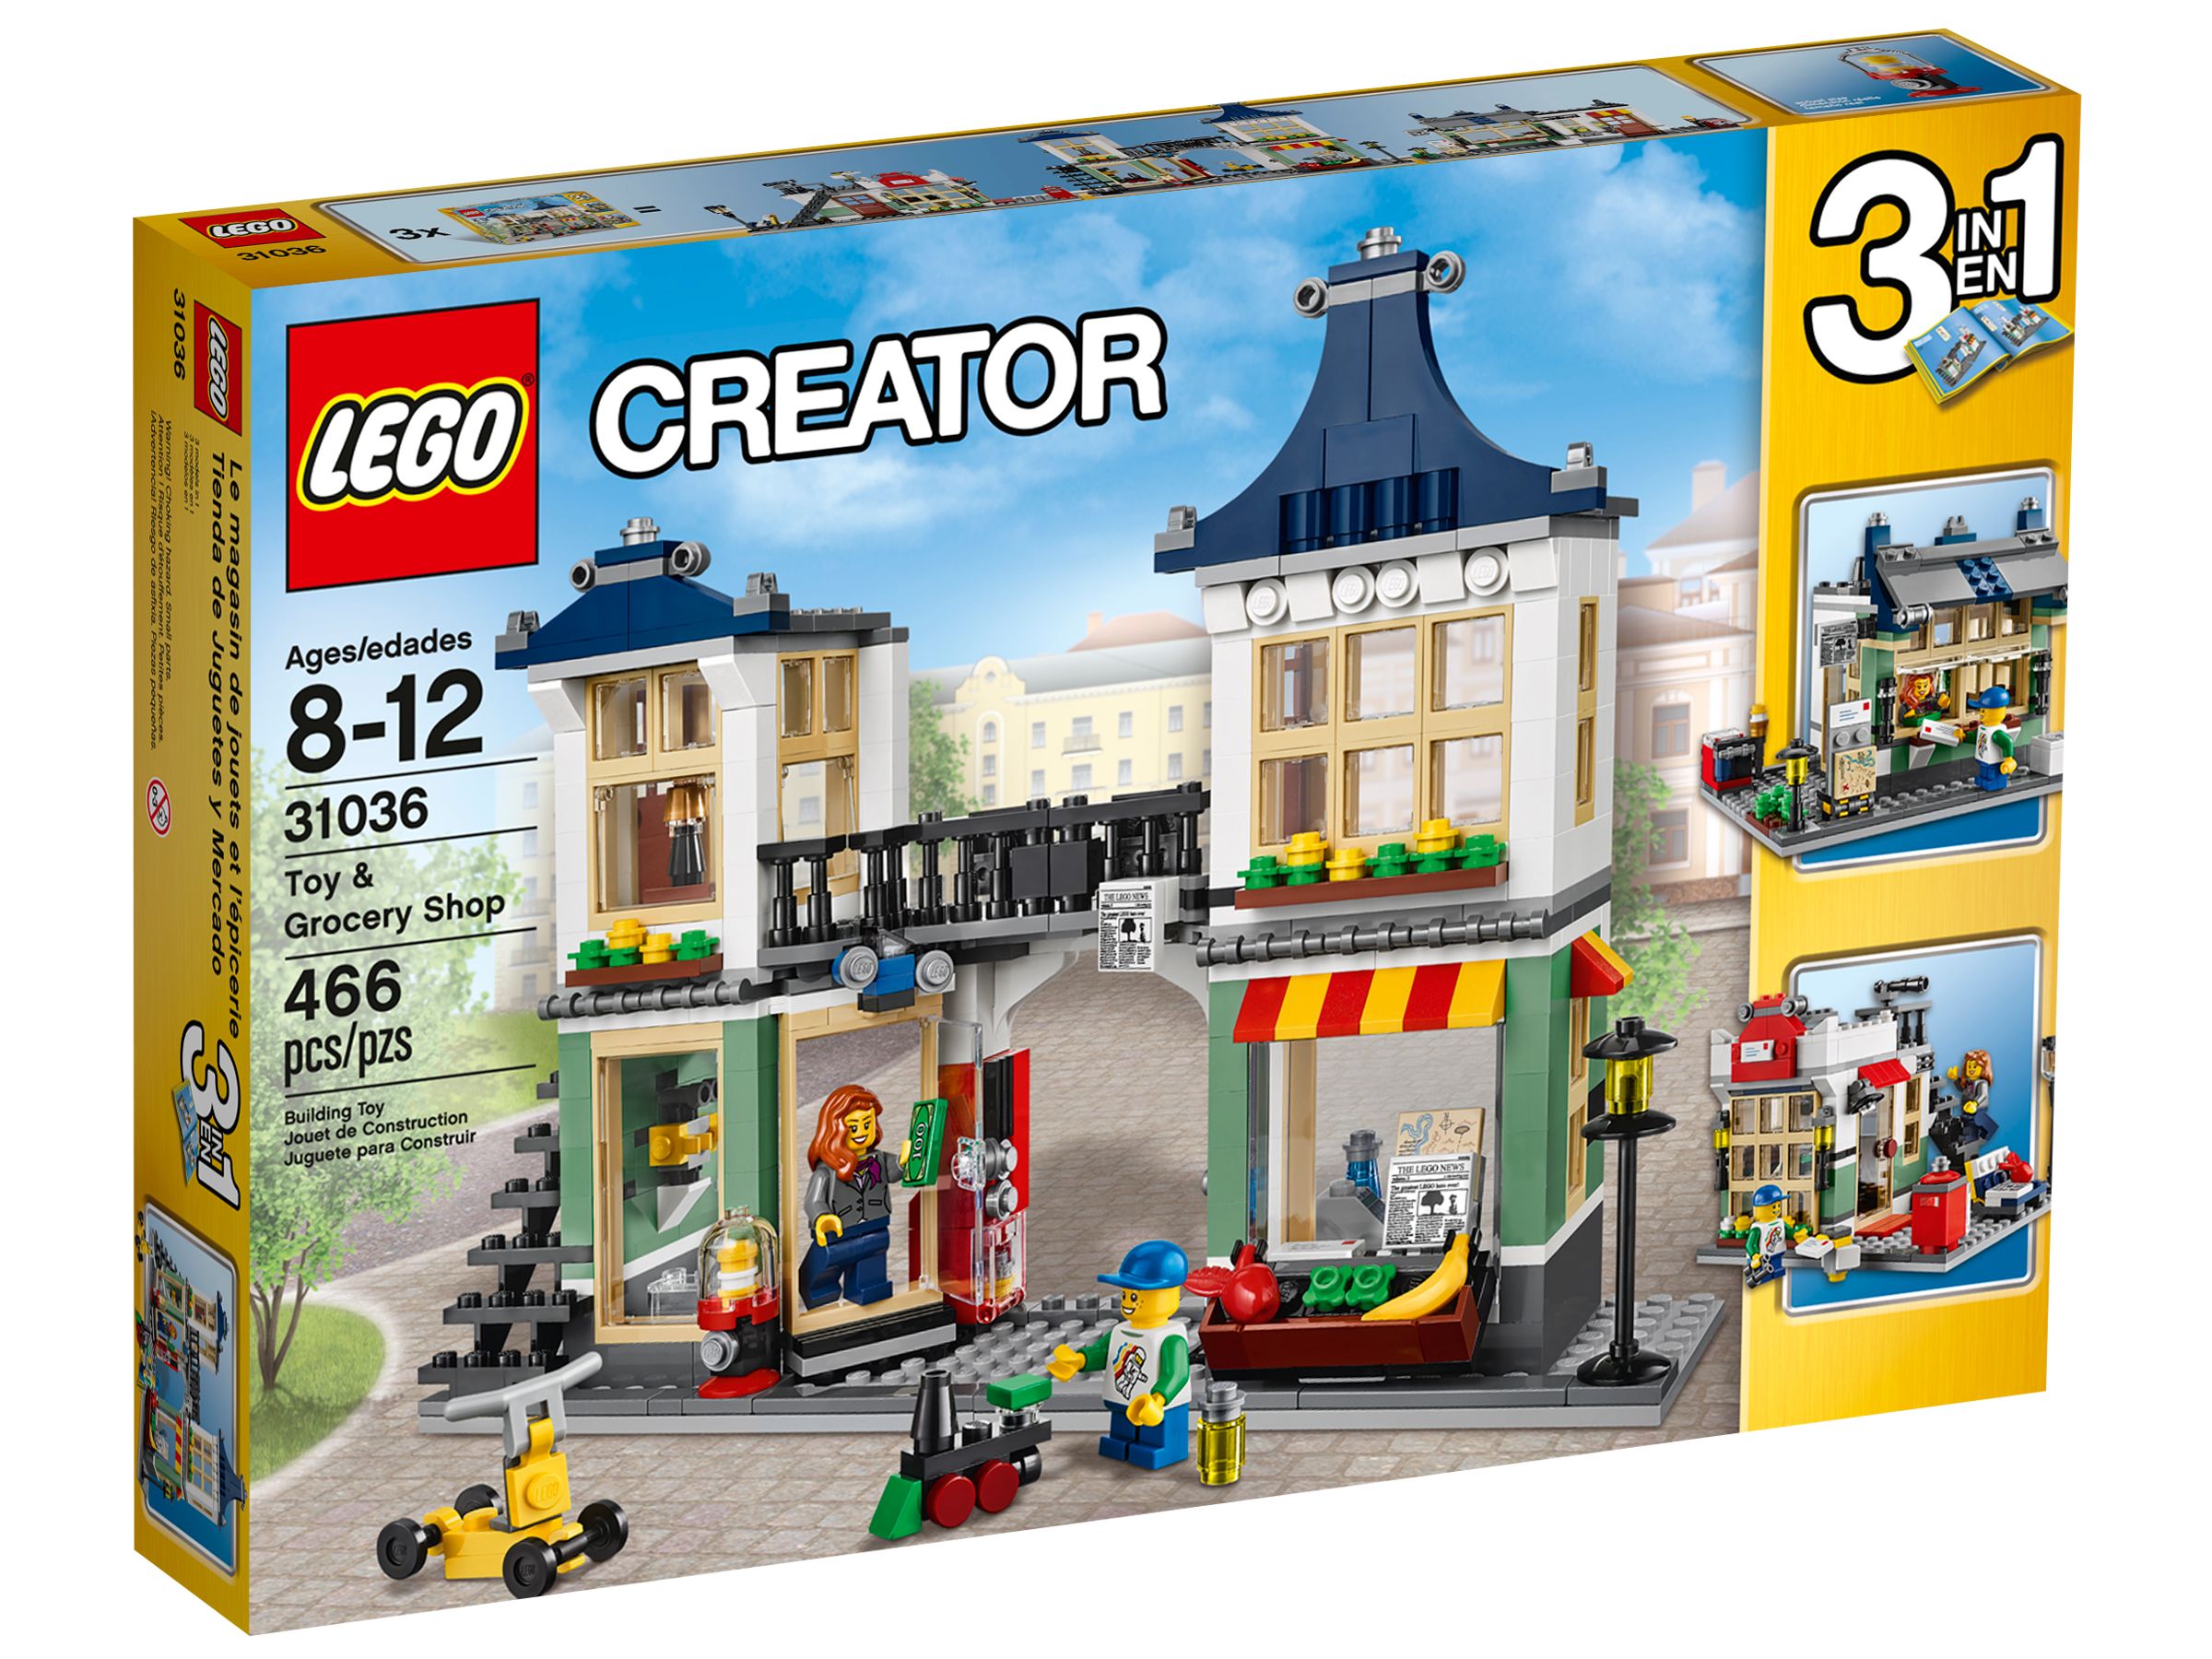 LEGO Creator 31036 Spielzeug- & Lebensmittelgeschäft LEGO_31036_alt1.jpg